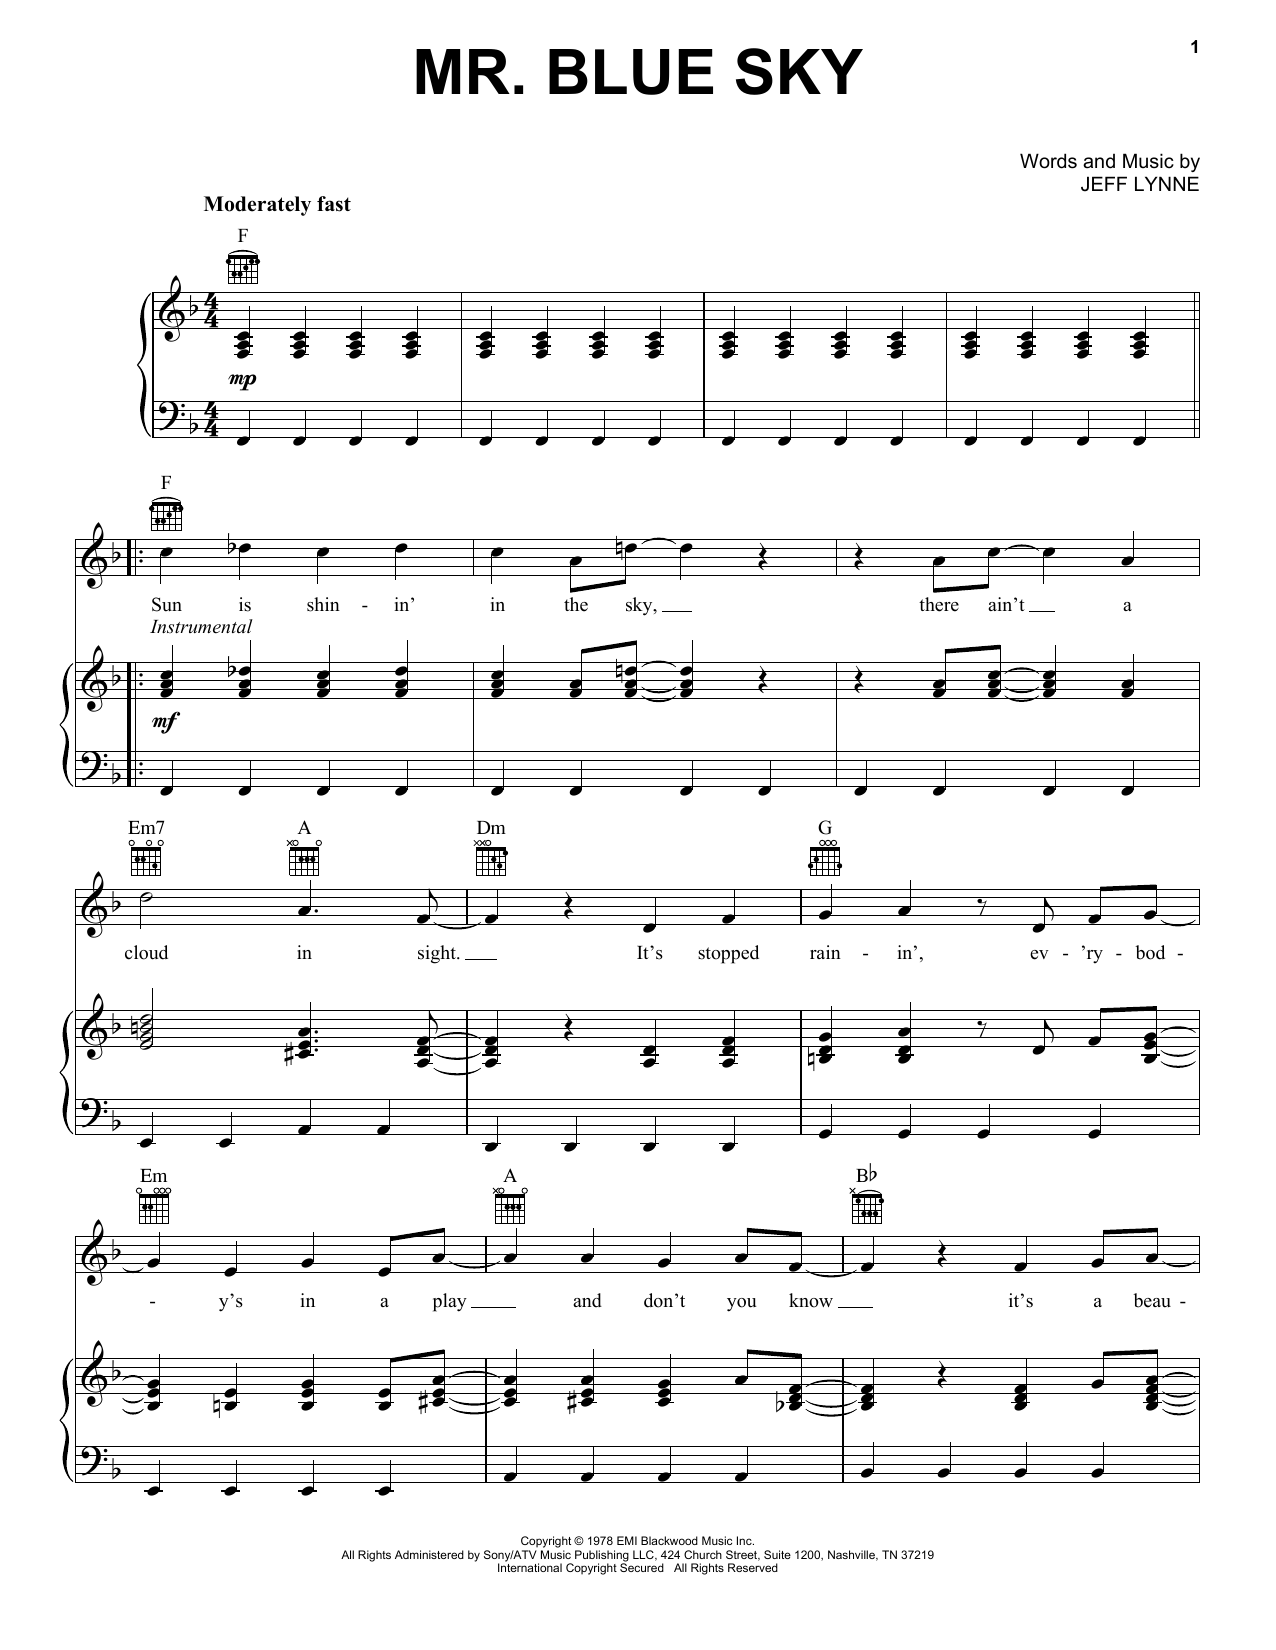 Electric Light Orchestra Mr. Blue Sky Sheet Music Notes & Chords for Ukulele - Download or Print PDF